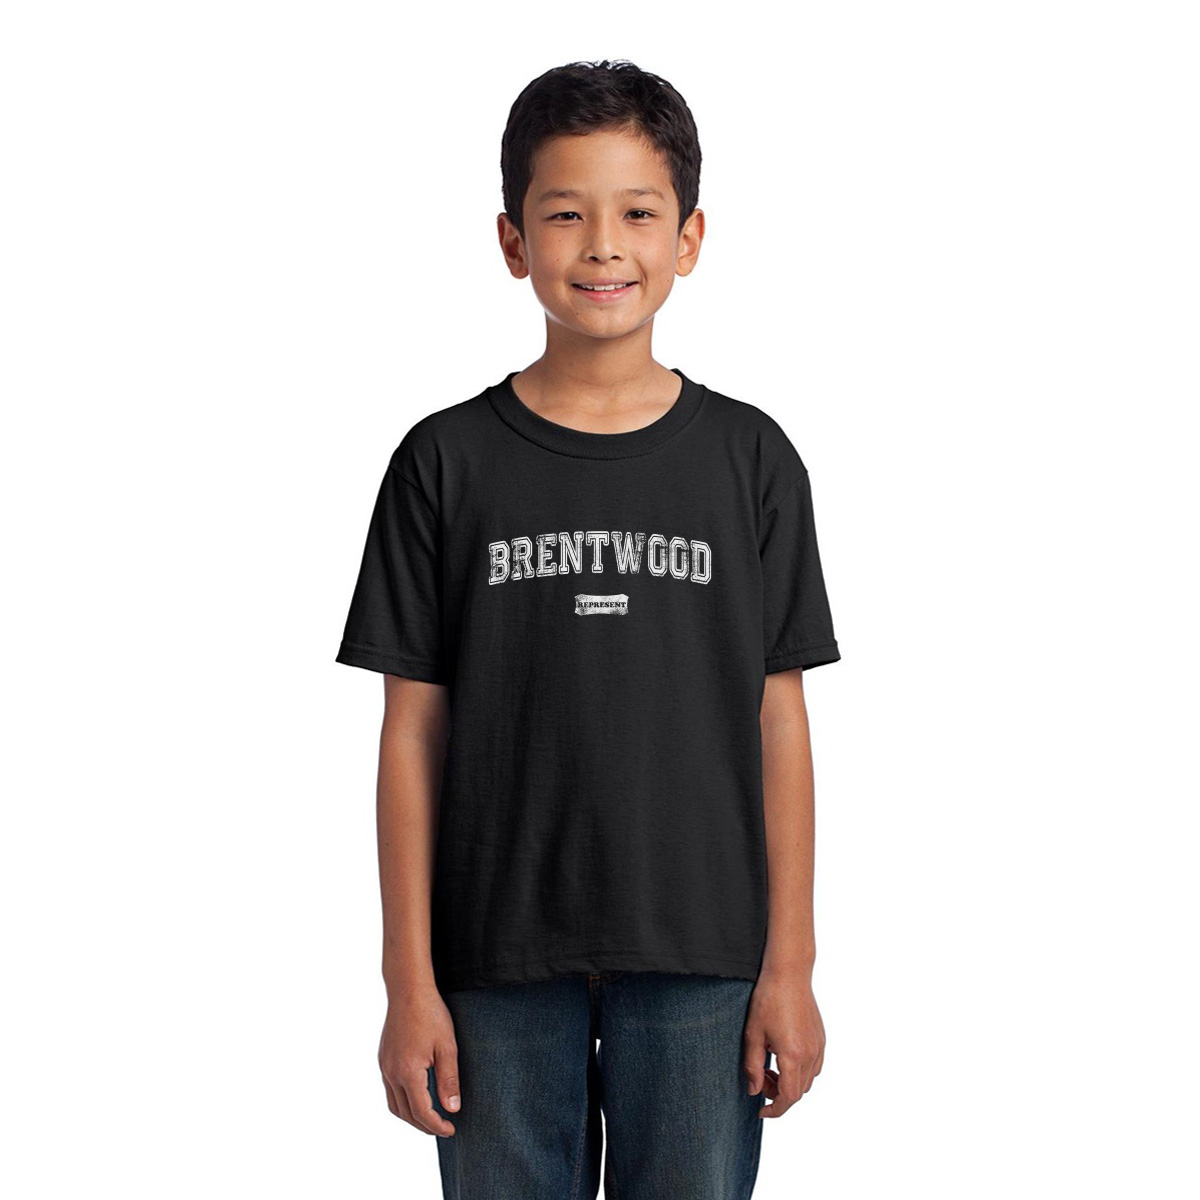 Brentwood Represent Toddler T-shirt | Black